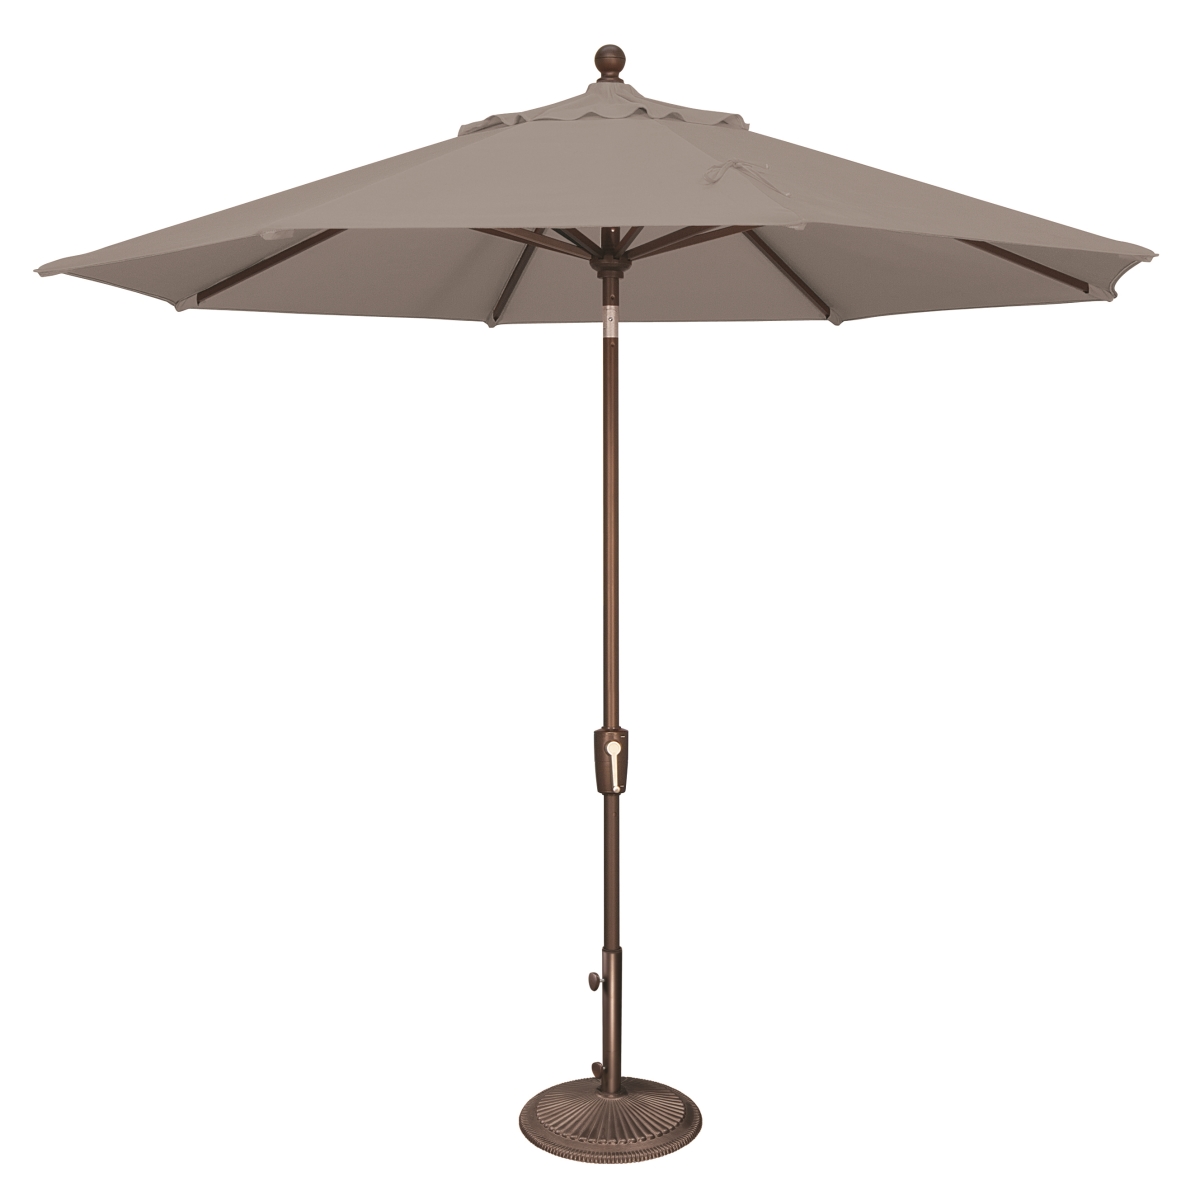 Simplyshade Ssum92-0900-a40433 Catalina 9 Ft. Octagon Sunbrella Push Button Tilt Umbrella Bronze